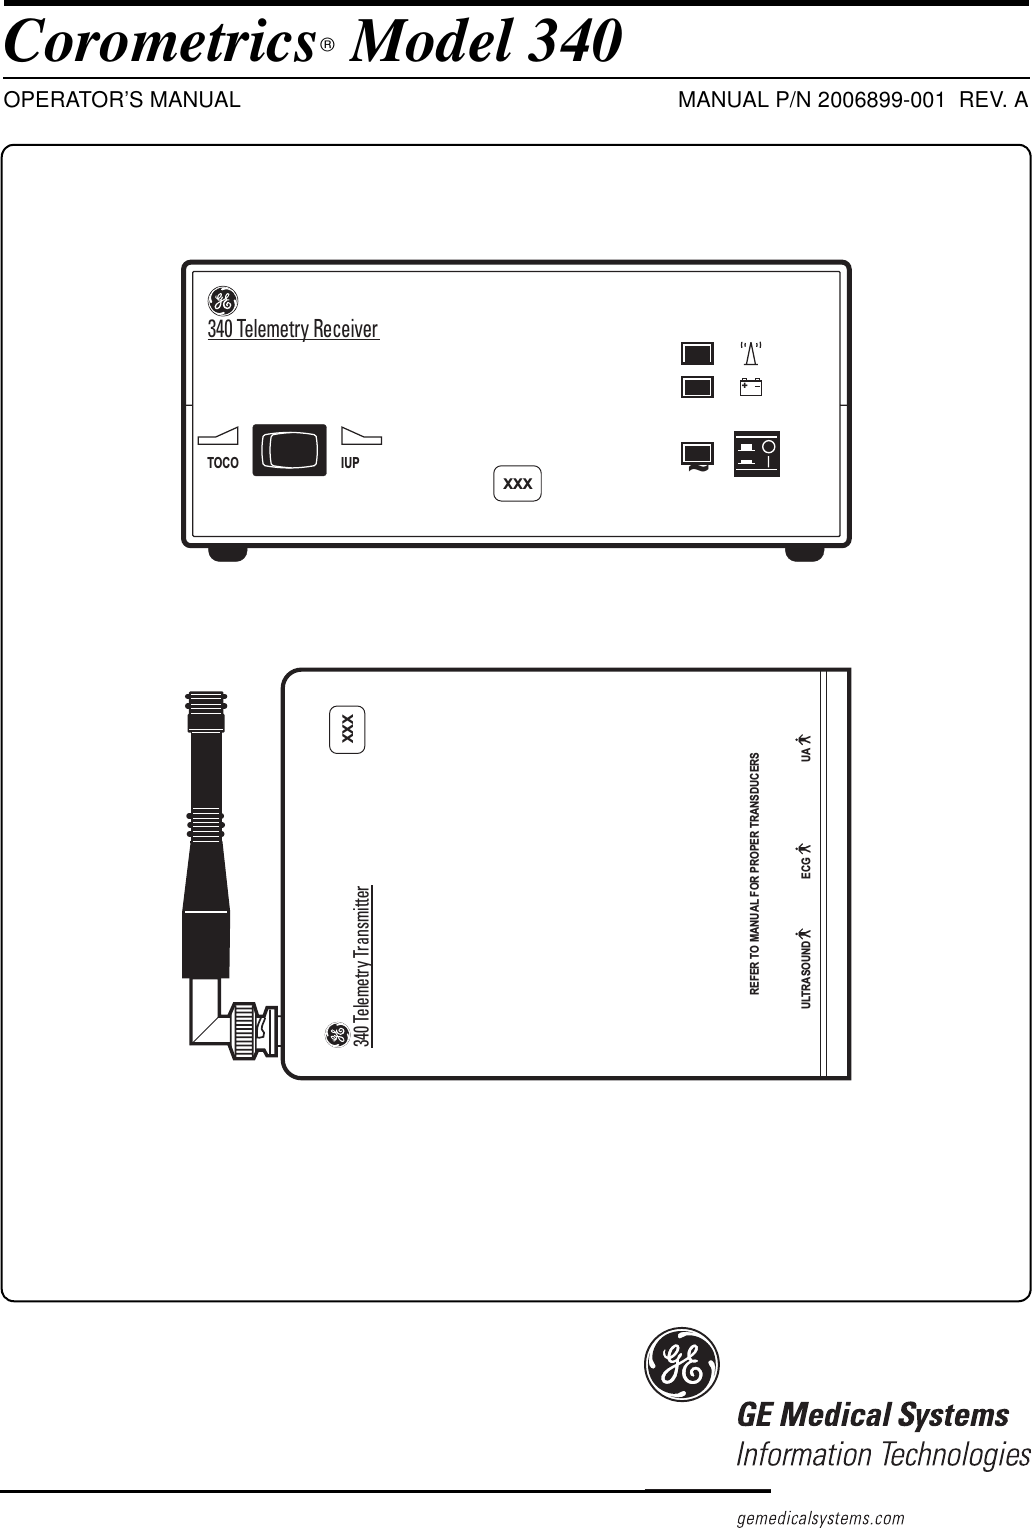 Corometrics Model 340OPERATOR’S MANUAL MANUAL P/N 2006899-001  REV. AIUPTOCO+~XXX340 Telemetry ReceiverREFER TO MANUAL FOR PROPER TRANSDUCERSULTRASOUND ECG UAXXX340 Telemetry Transmitter